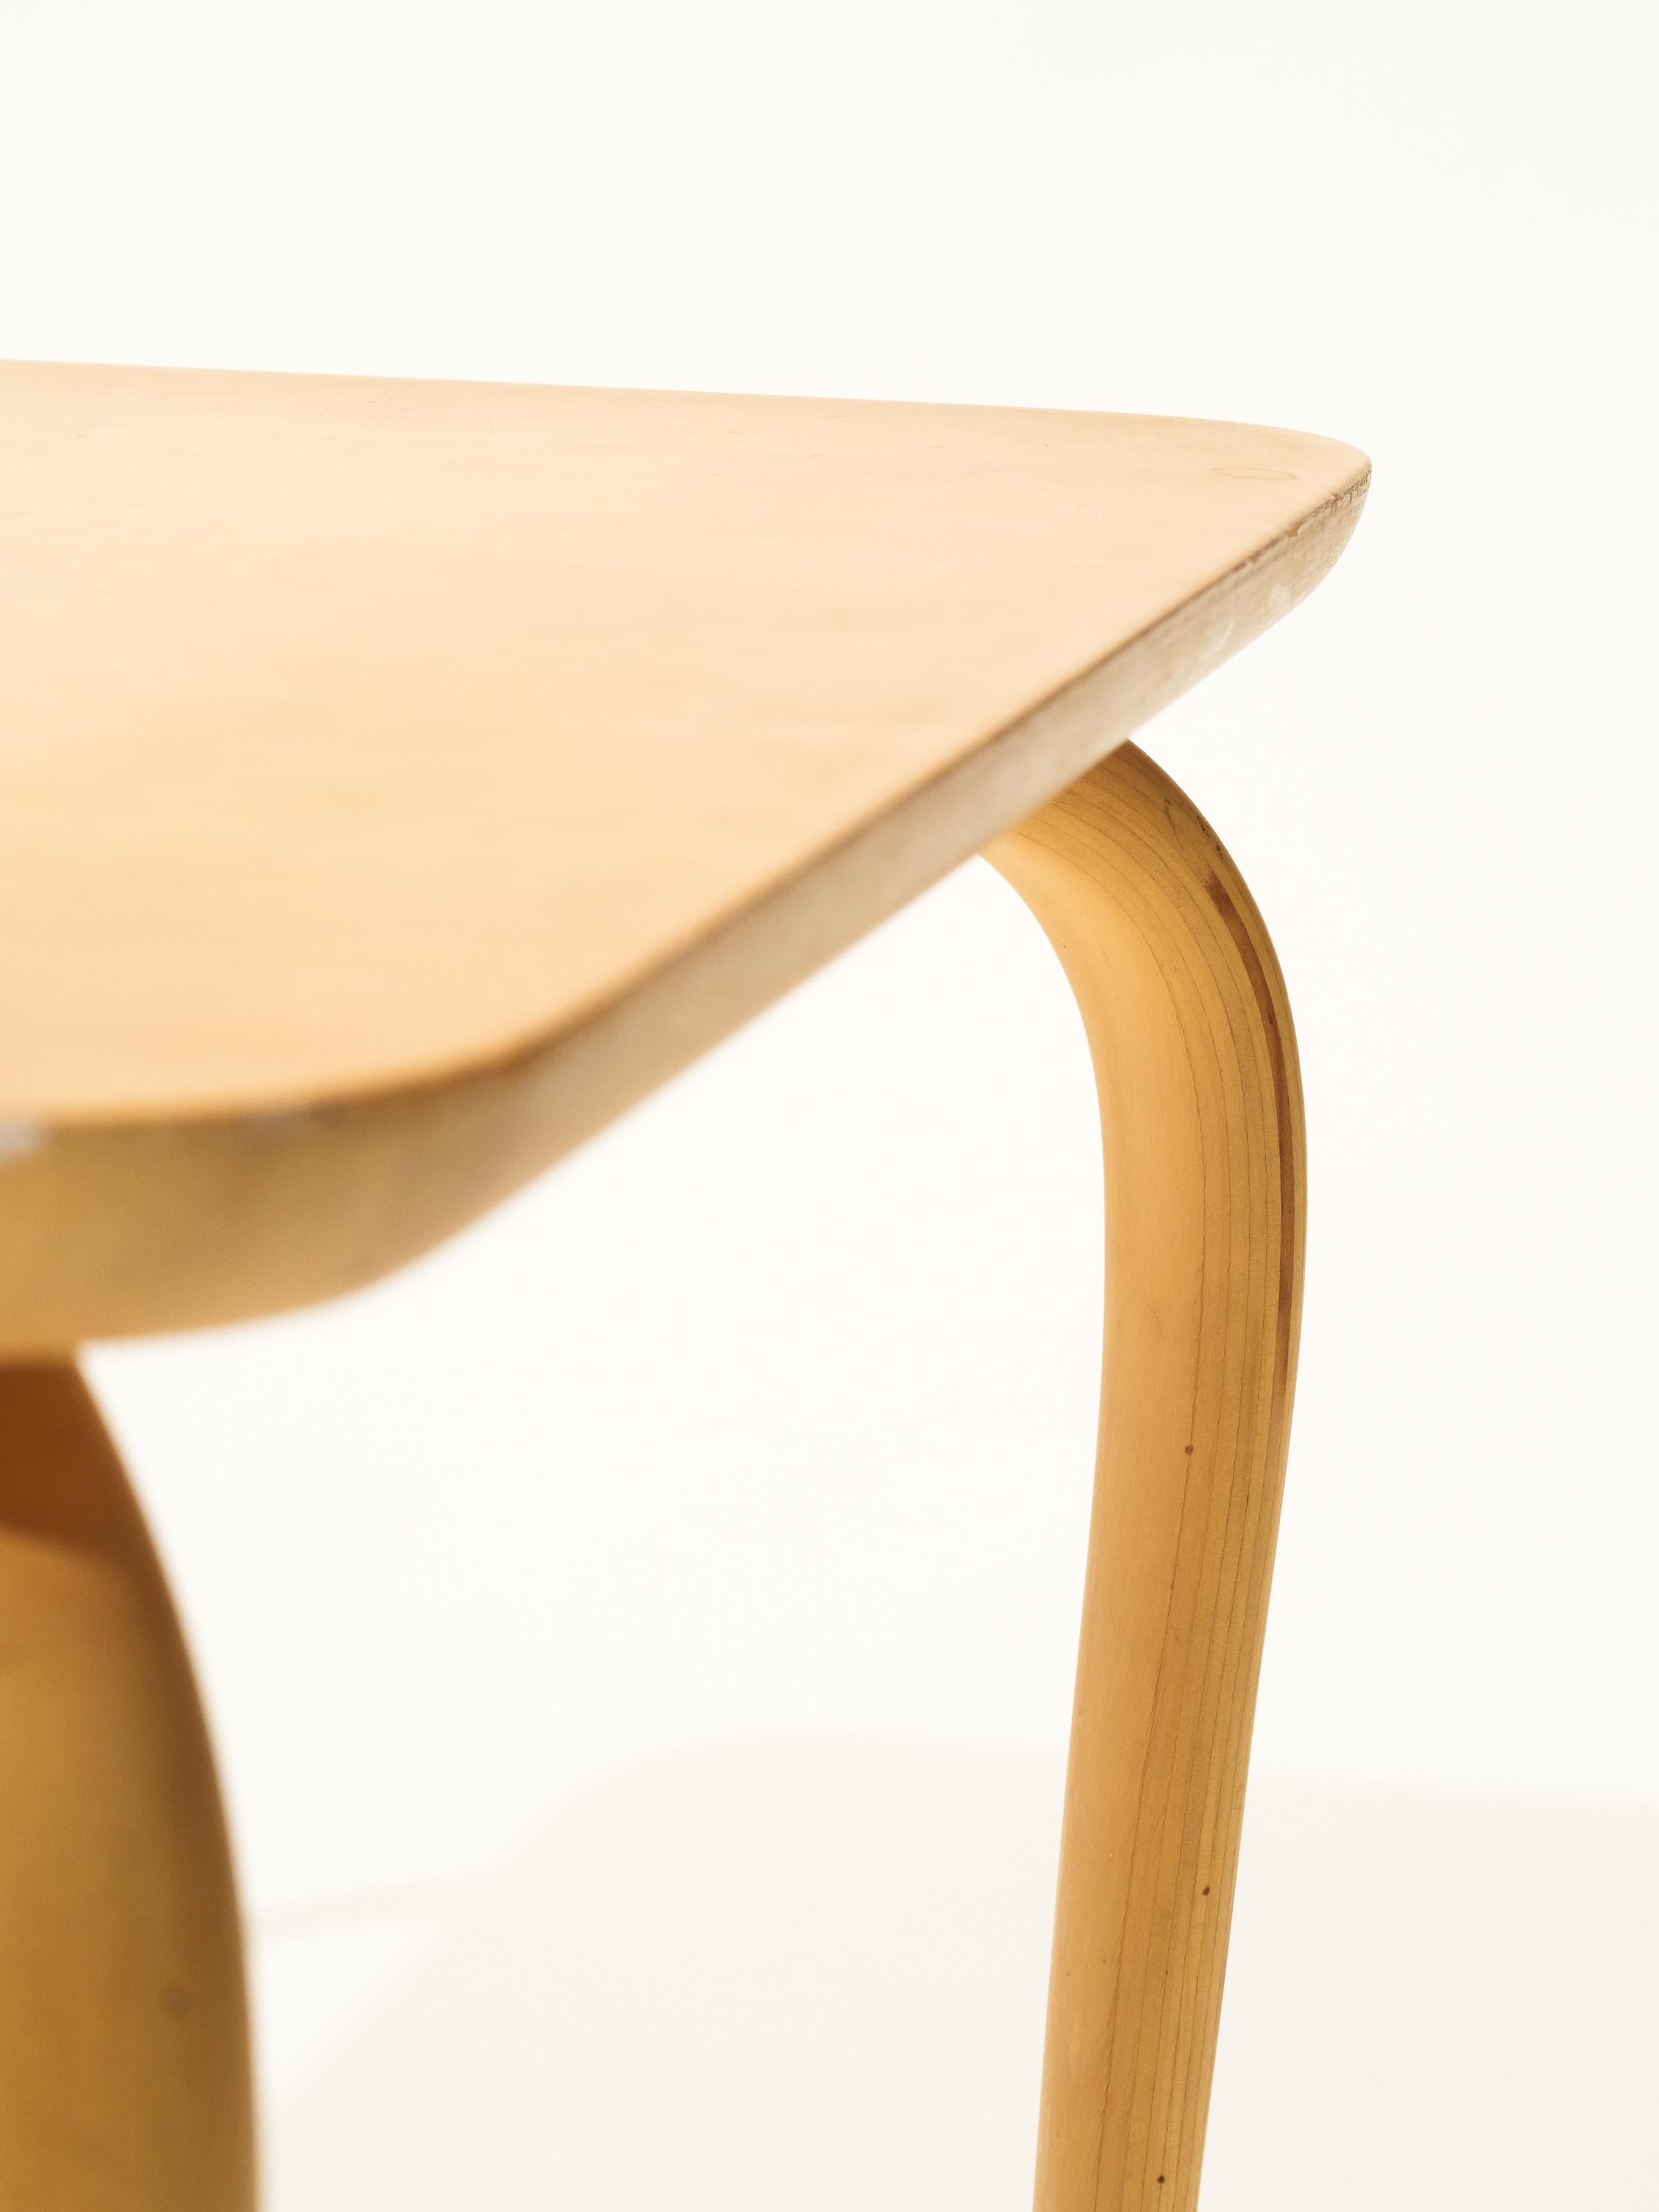 Birch Side Table “Annika” by Bruno Mathsson for Karl Mathsson, Sweden, 1960s For Sale 2